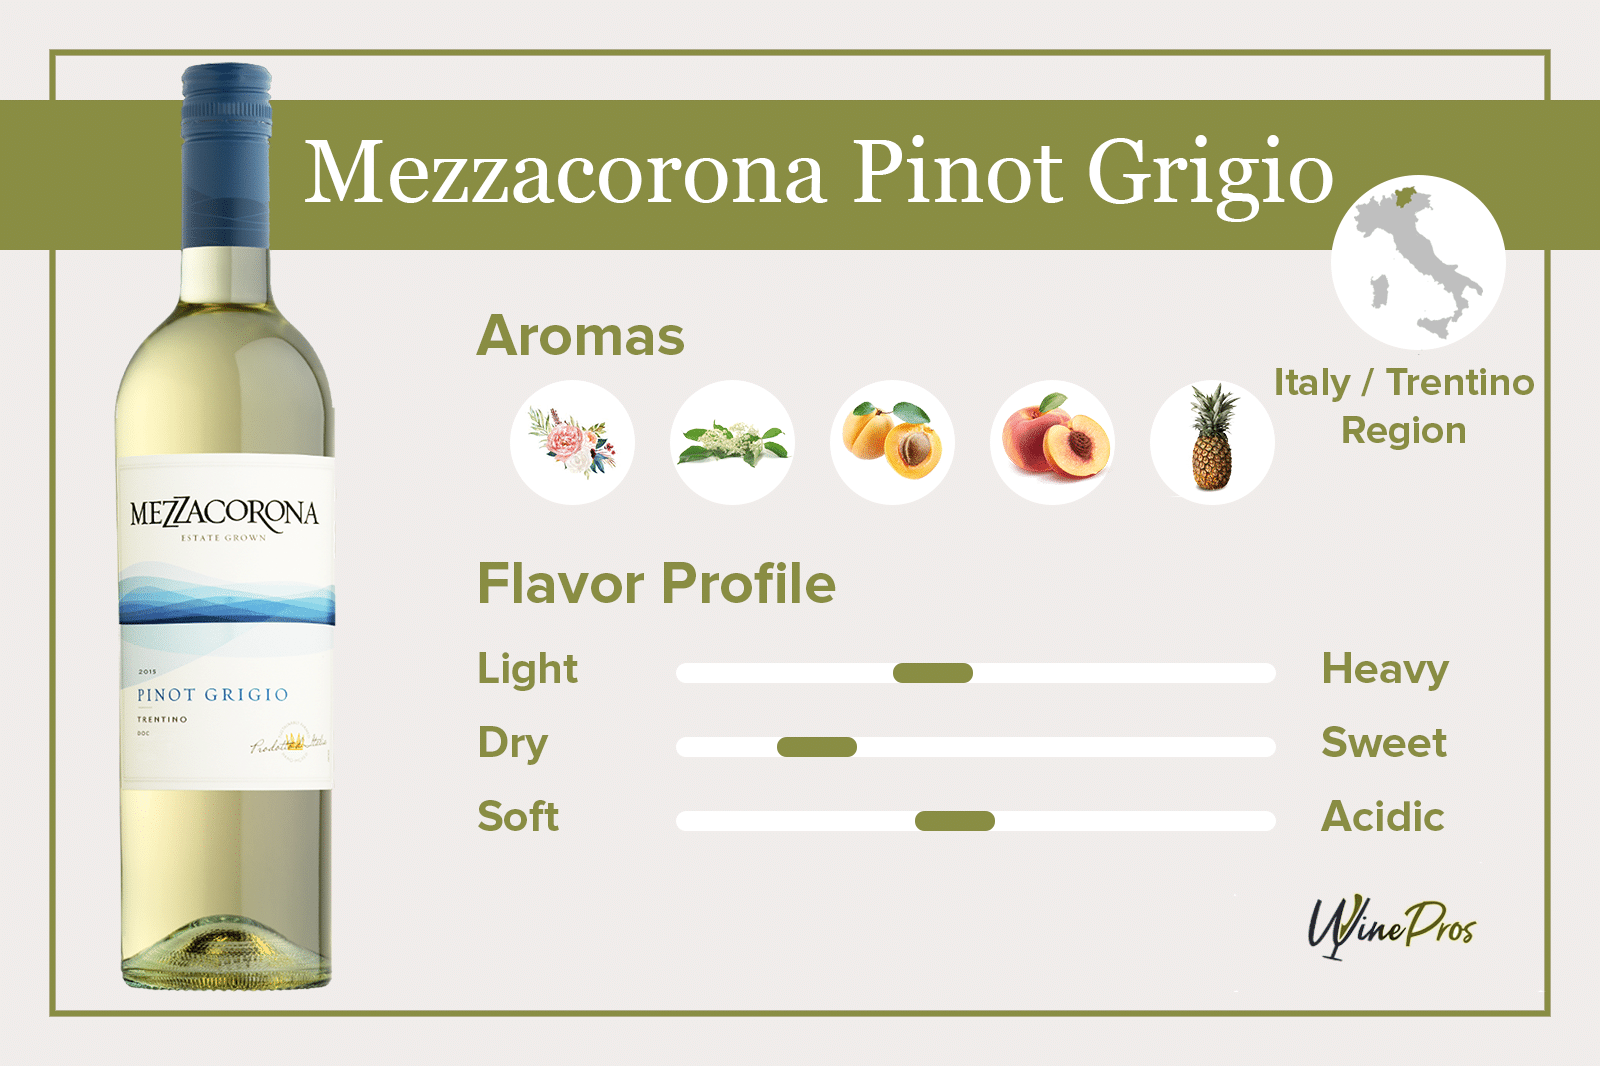 Mezzacorona Pinot Grigio Dolomiti Review (2022)